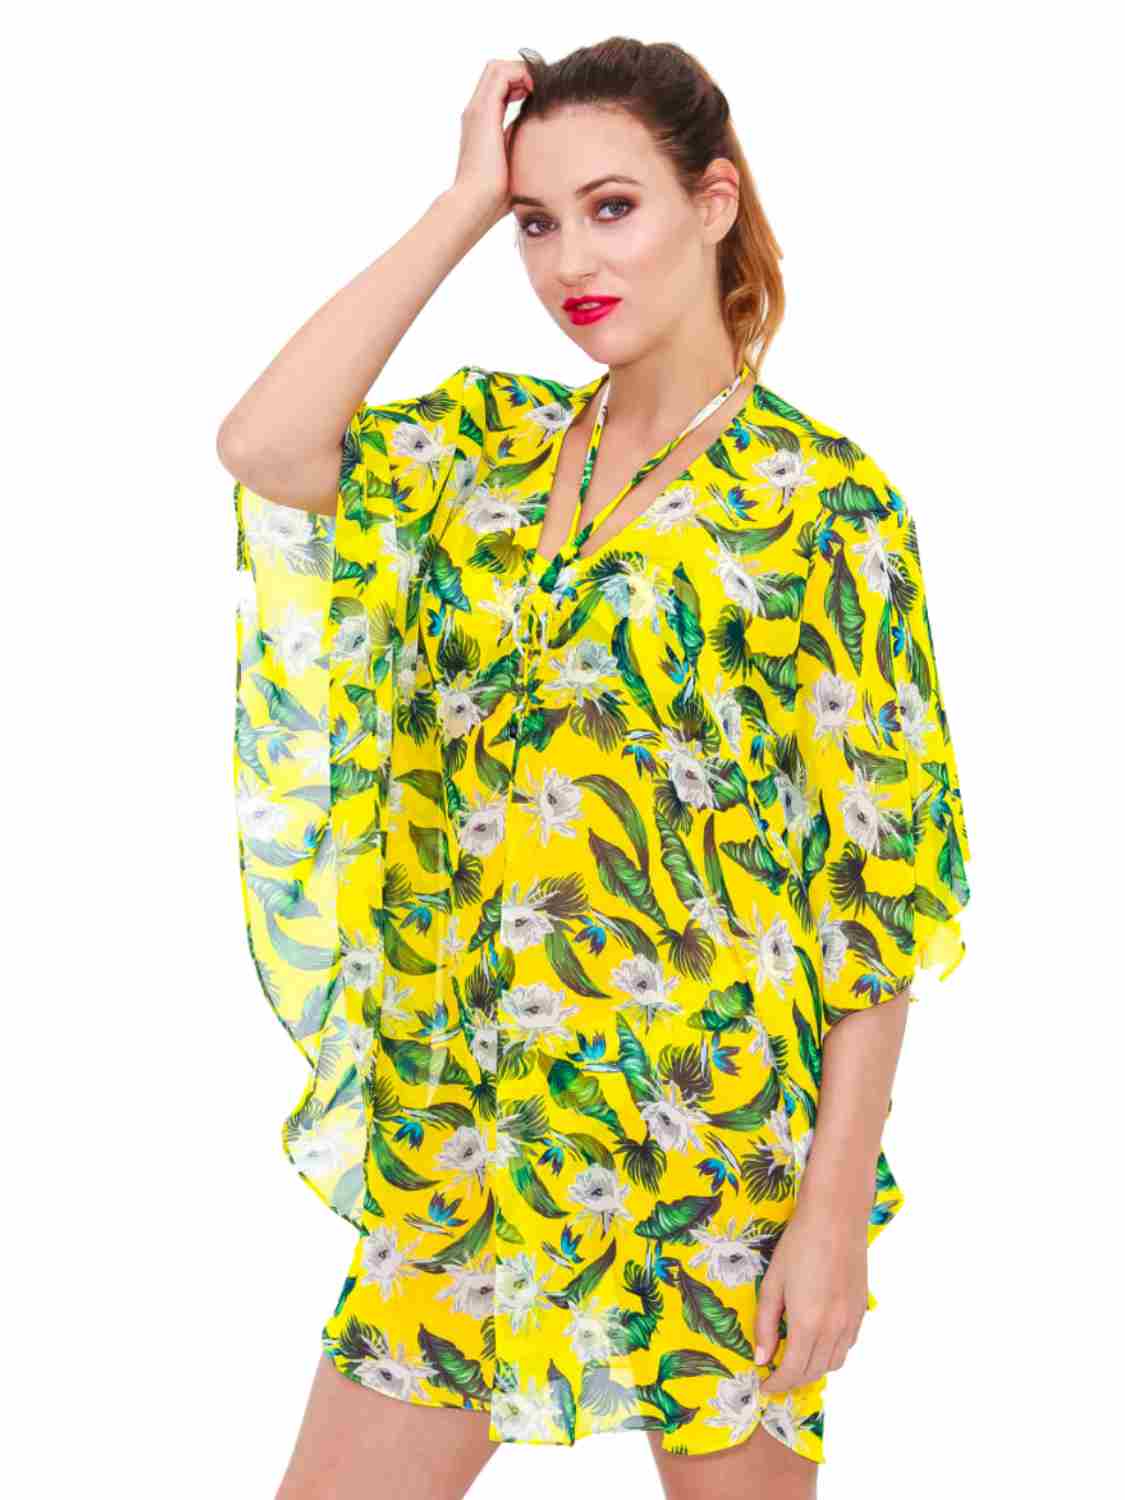 La Moda Womens Semi-Sheer Yellow & Green Tropical Floral Print  Swim Suit Cover Up Top